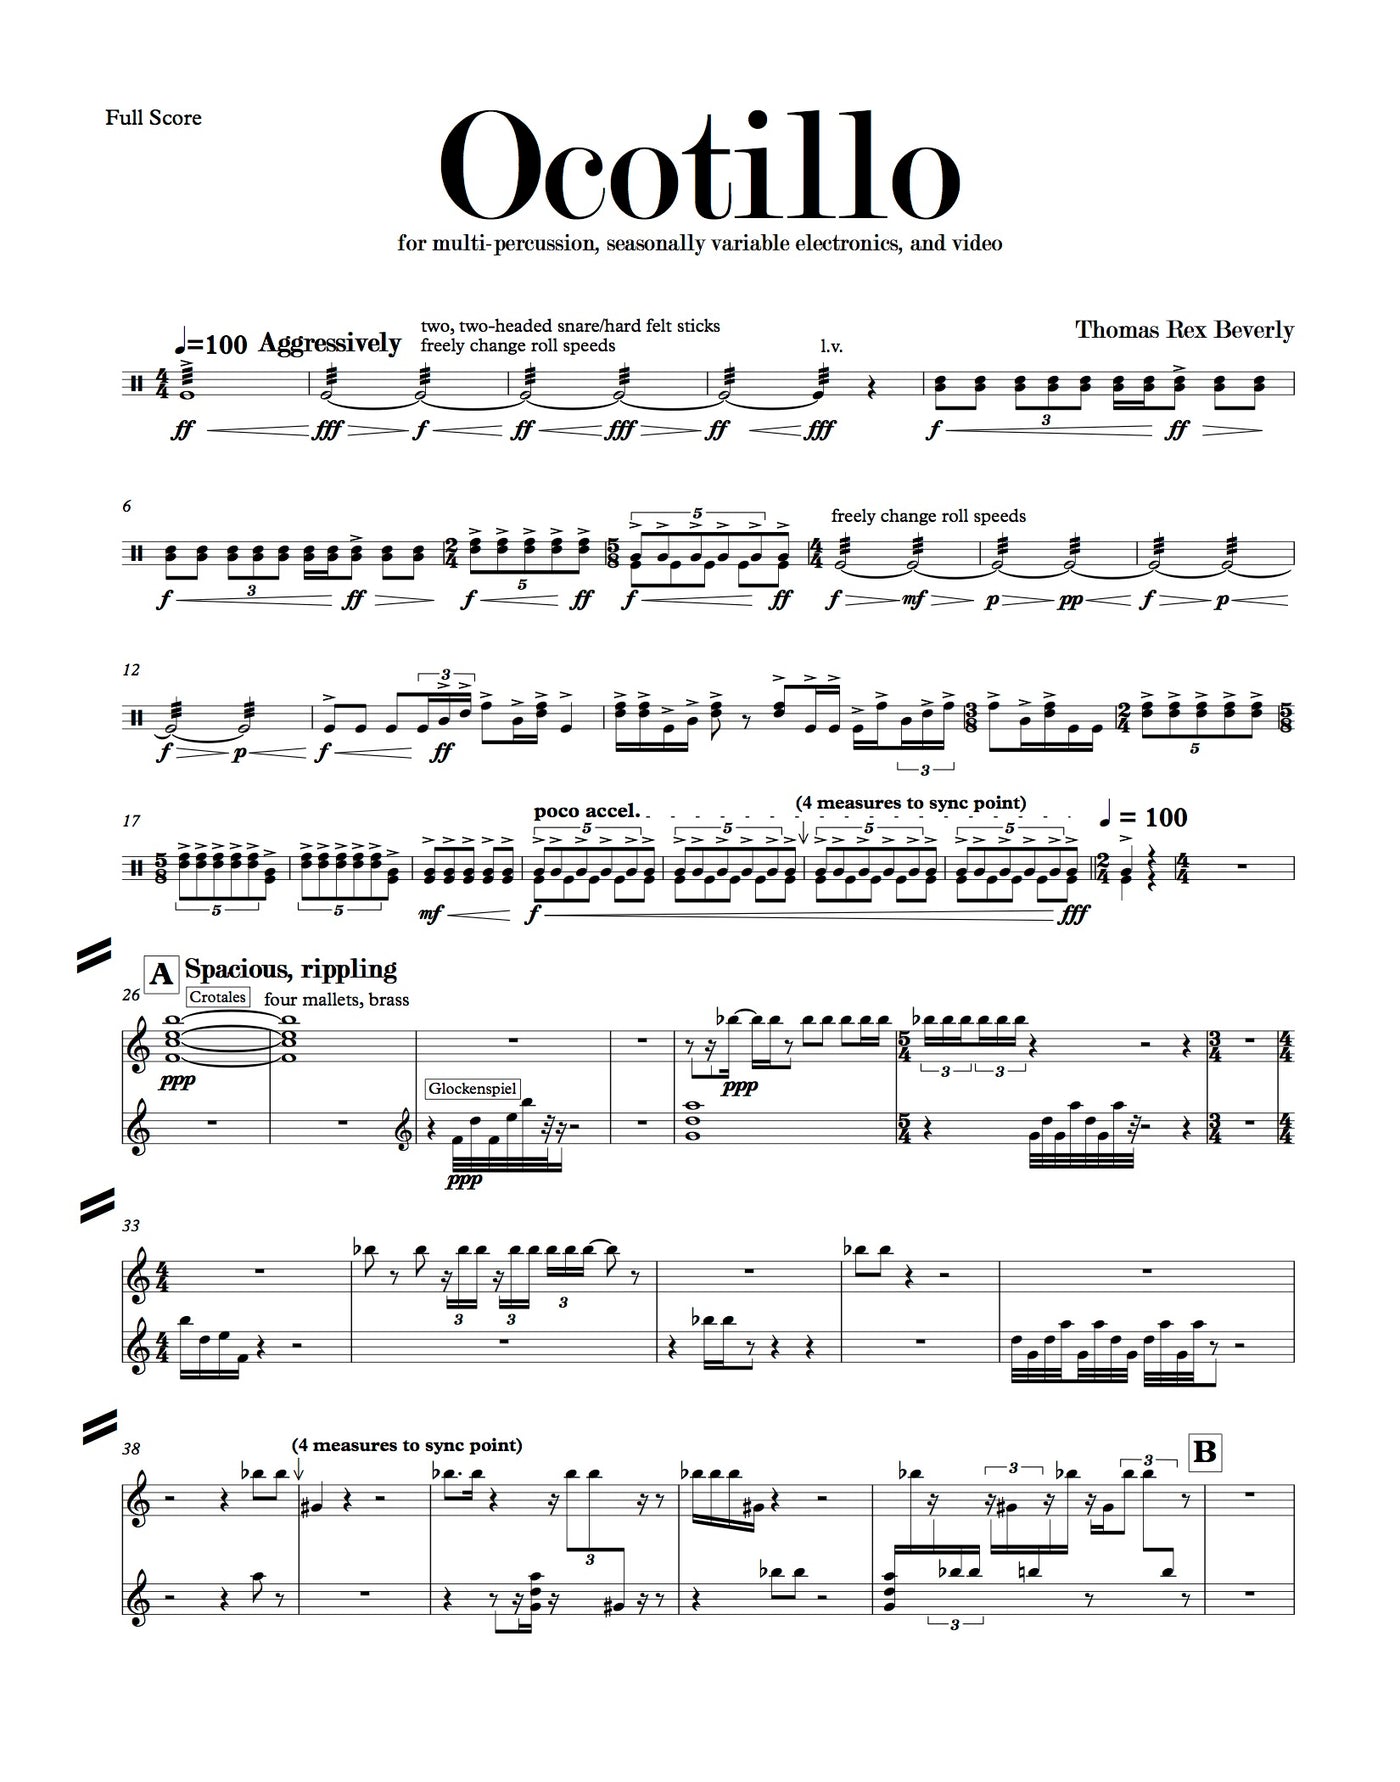 Ocotillo for multi-percussion, seasonal electronics, and video (2013) - 10'